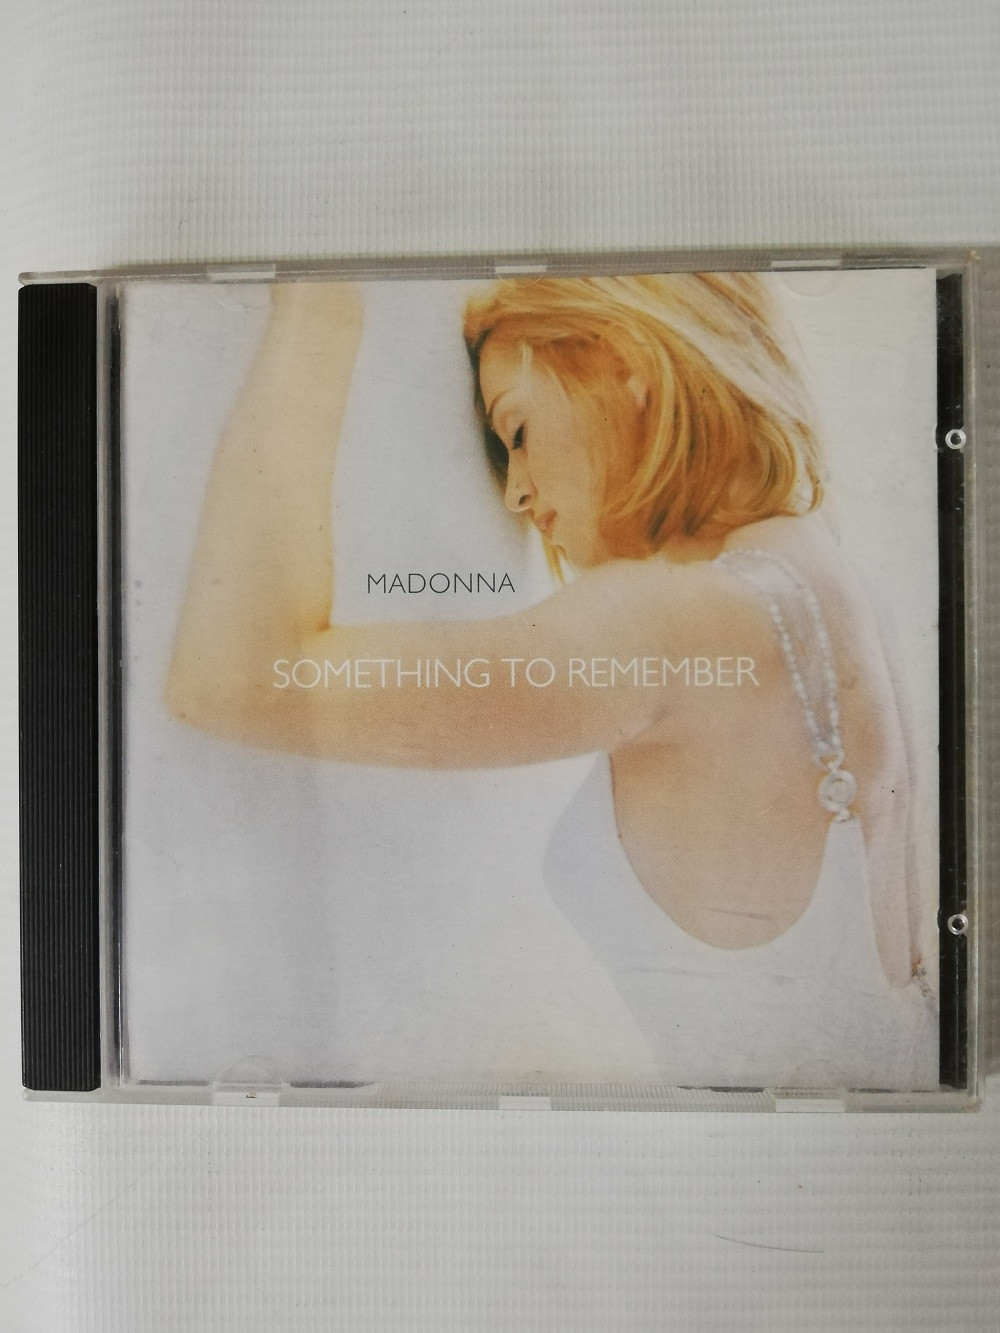 Imagen CD MADONNA - SOMETHING TO REMEMBER